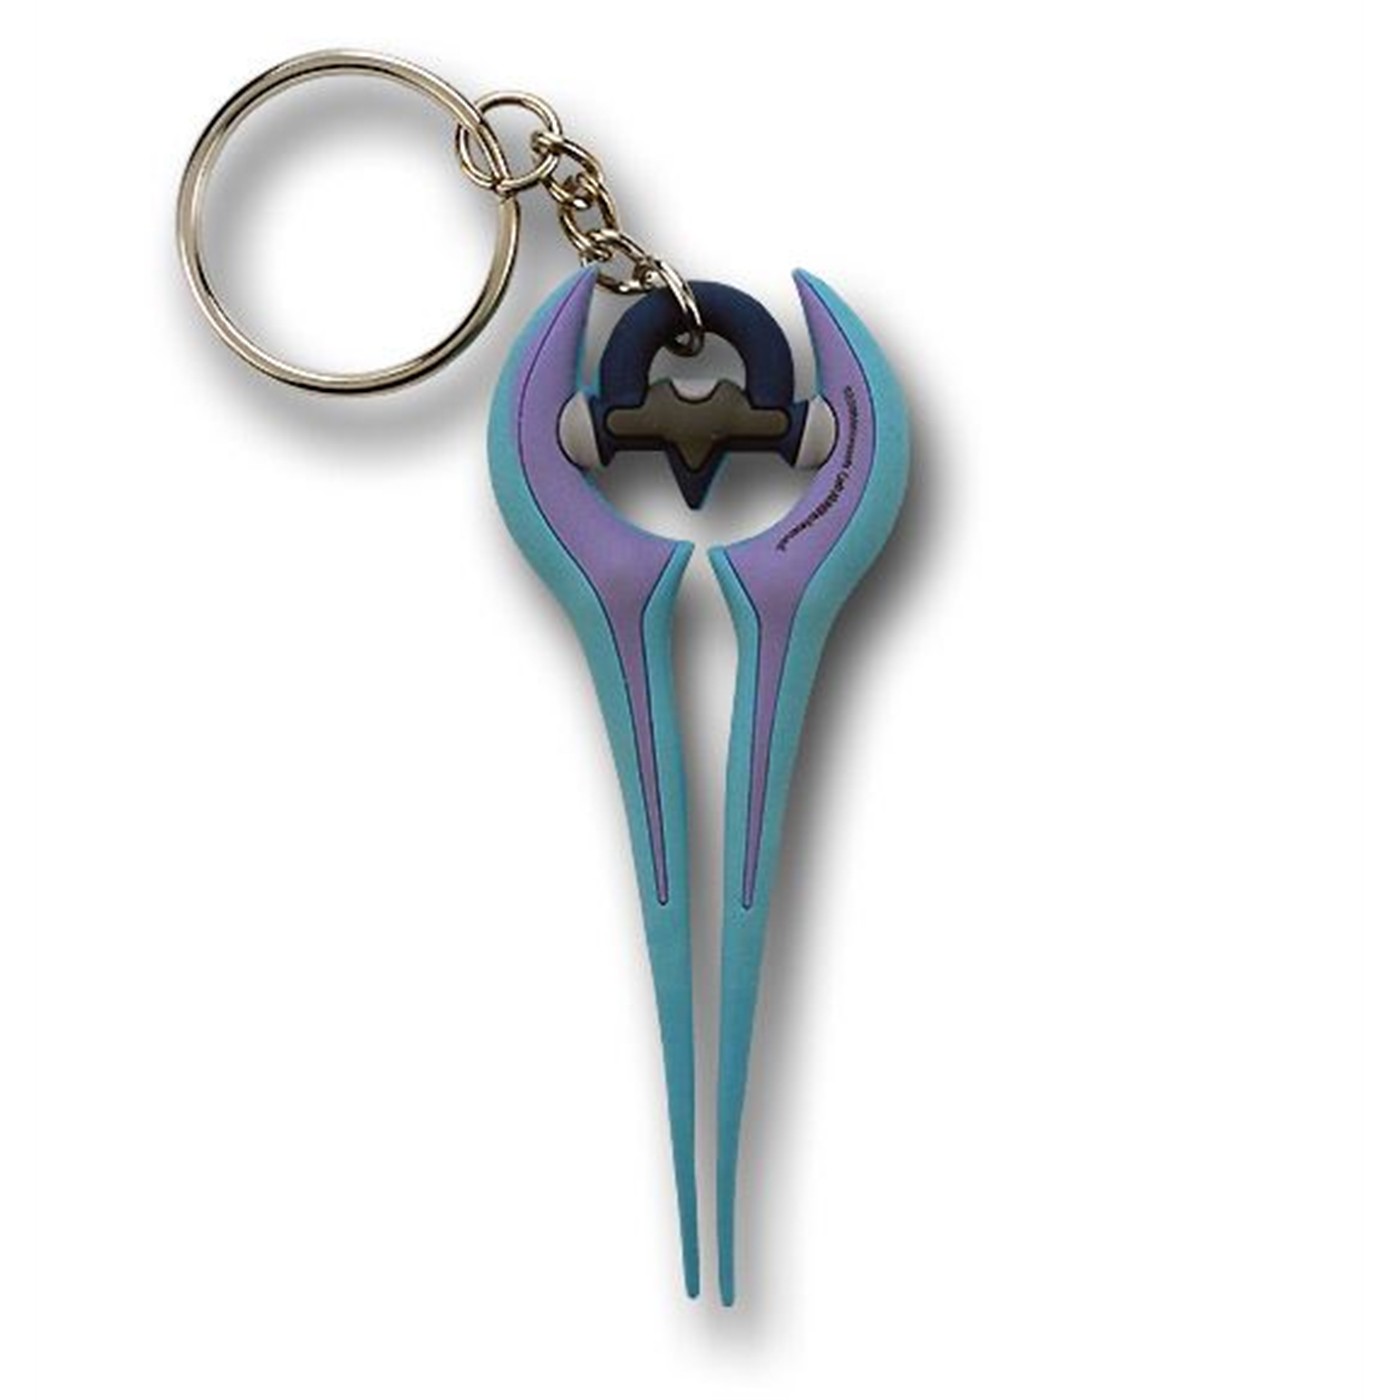 Halo 3 Covenant Energy Sword PVC Keychain